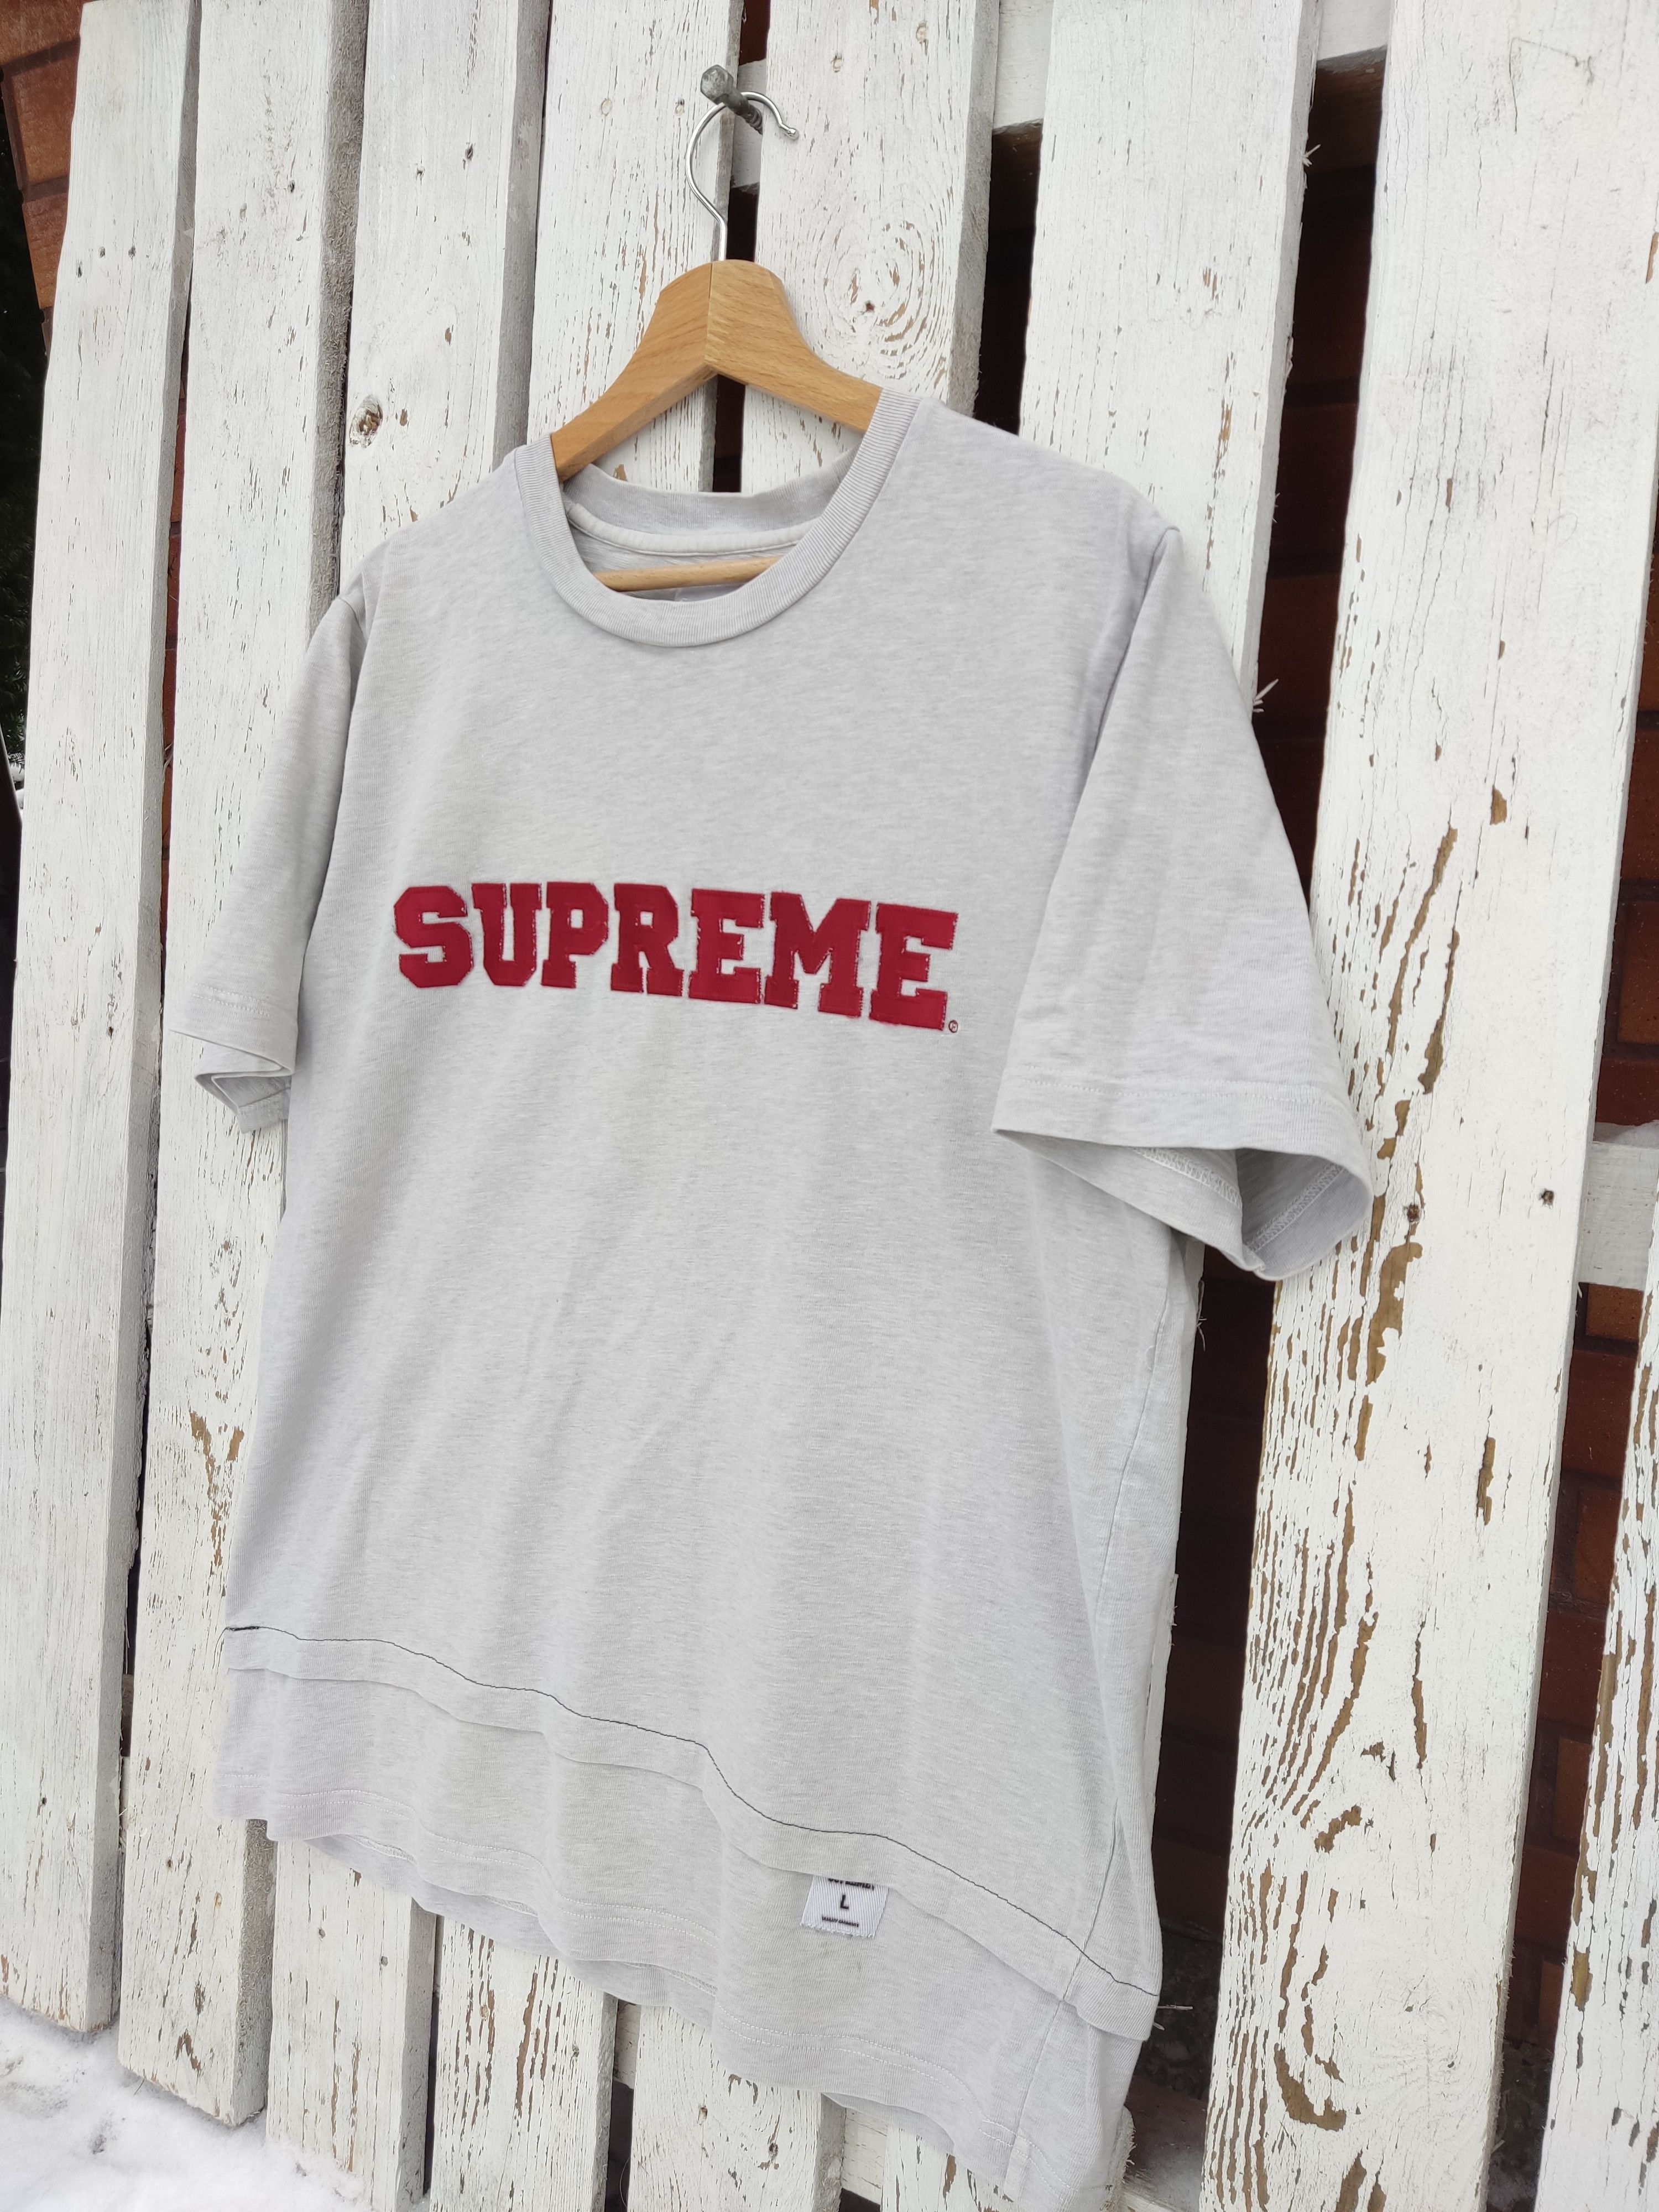 Supreme Supreme Box logo big tee grey L | Grailed